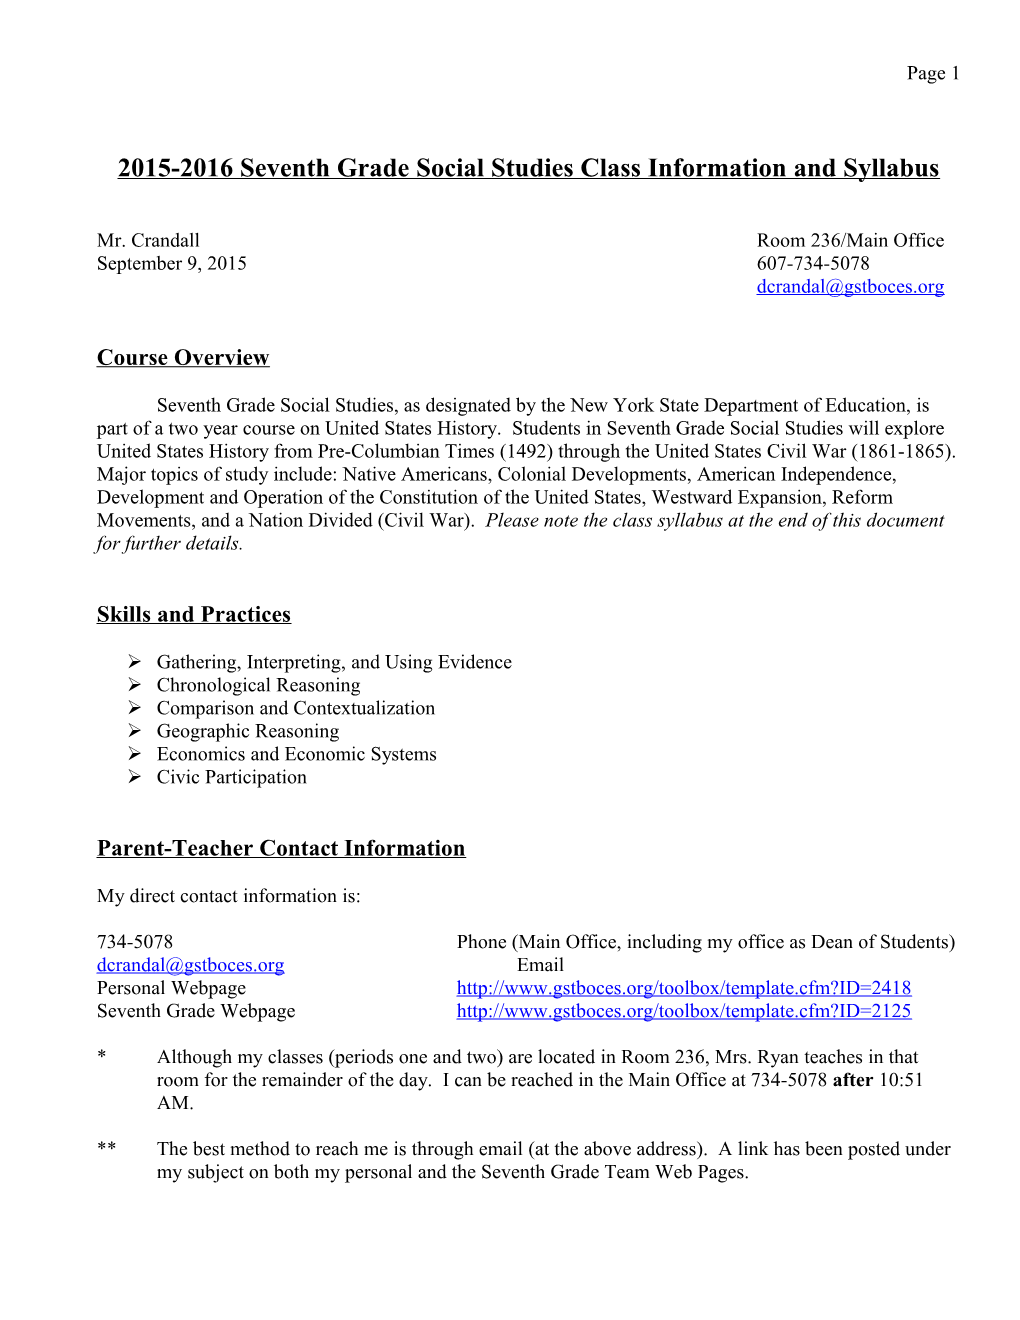 2015-2016 Seventh Grade Social Studies Class Information and Syllabus